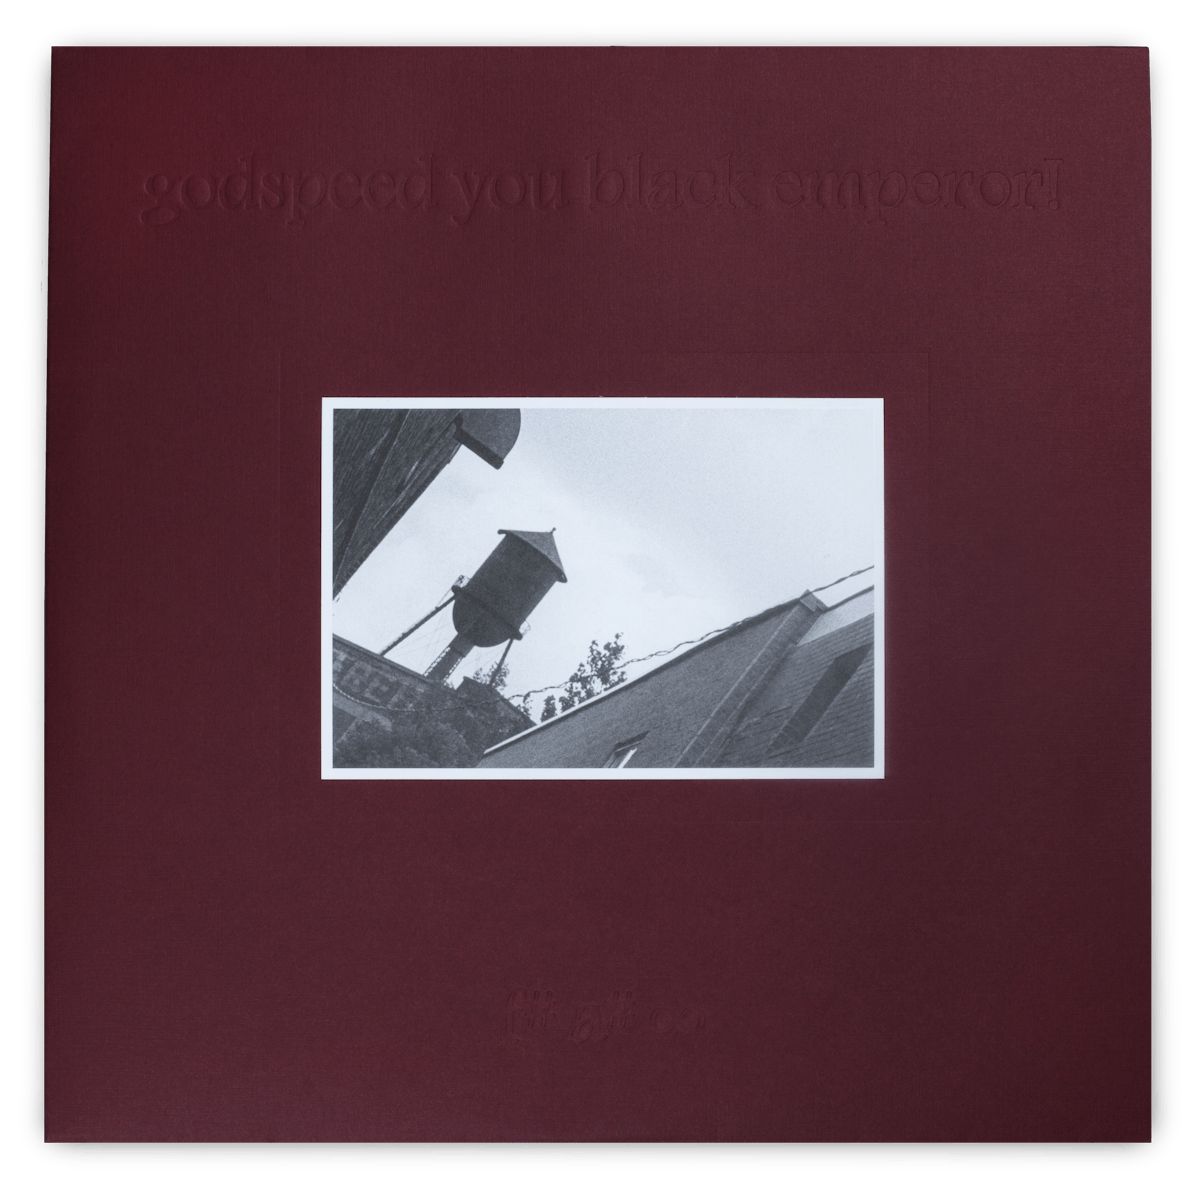 A vinyl record by Godspeed You Black Emperor!